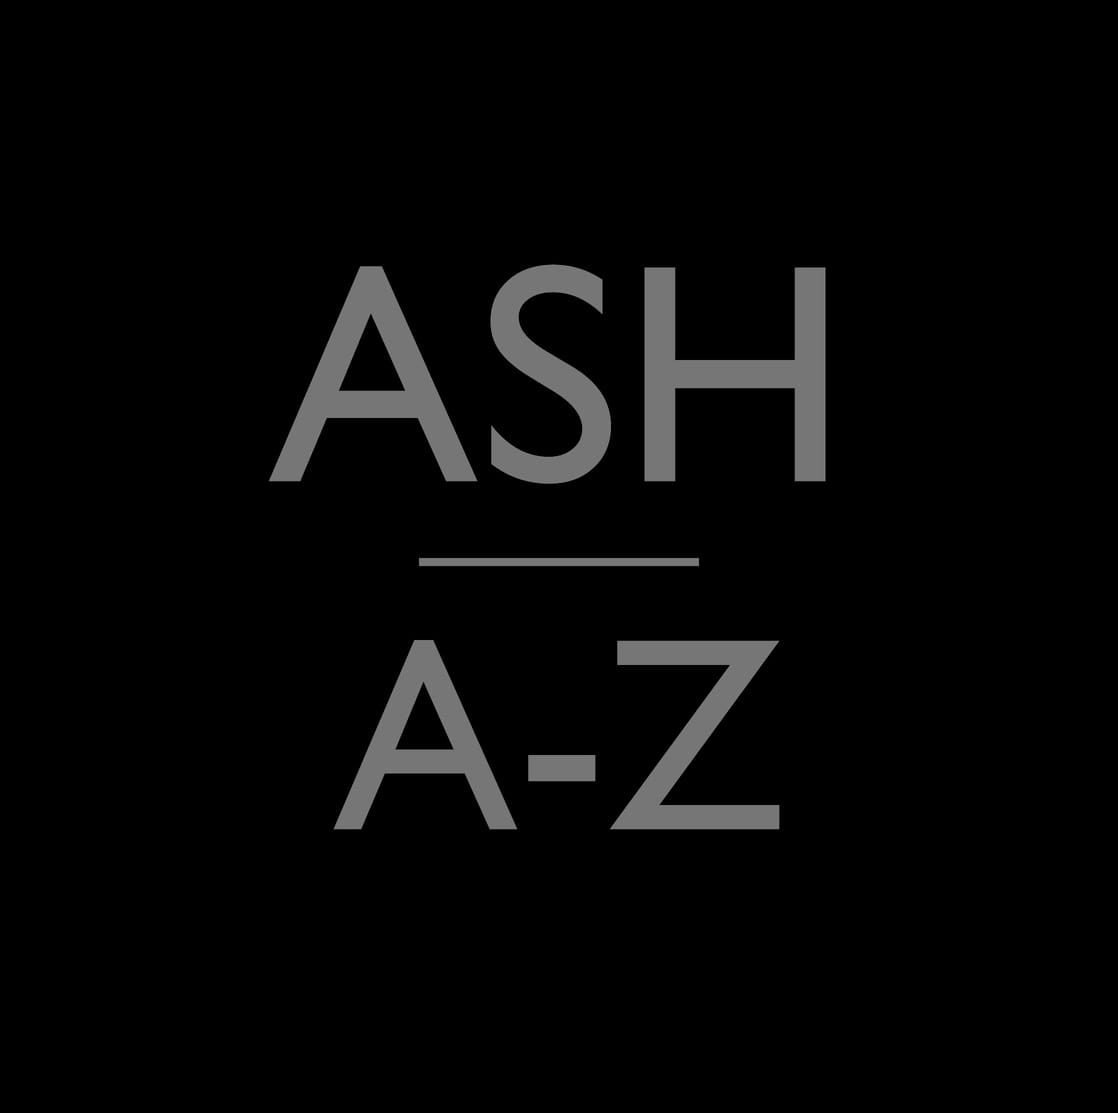 The A-Z Series [Vinyl]